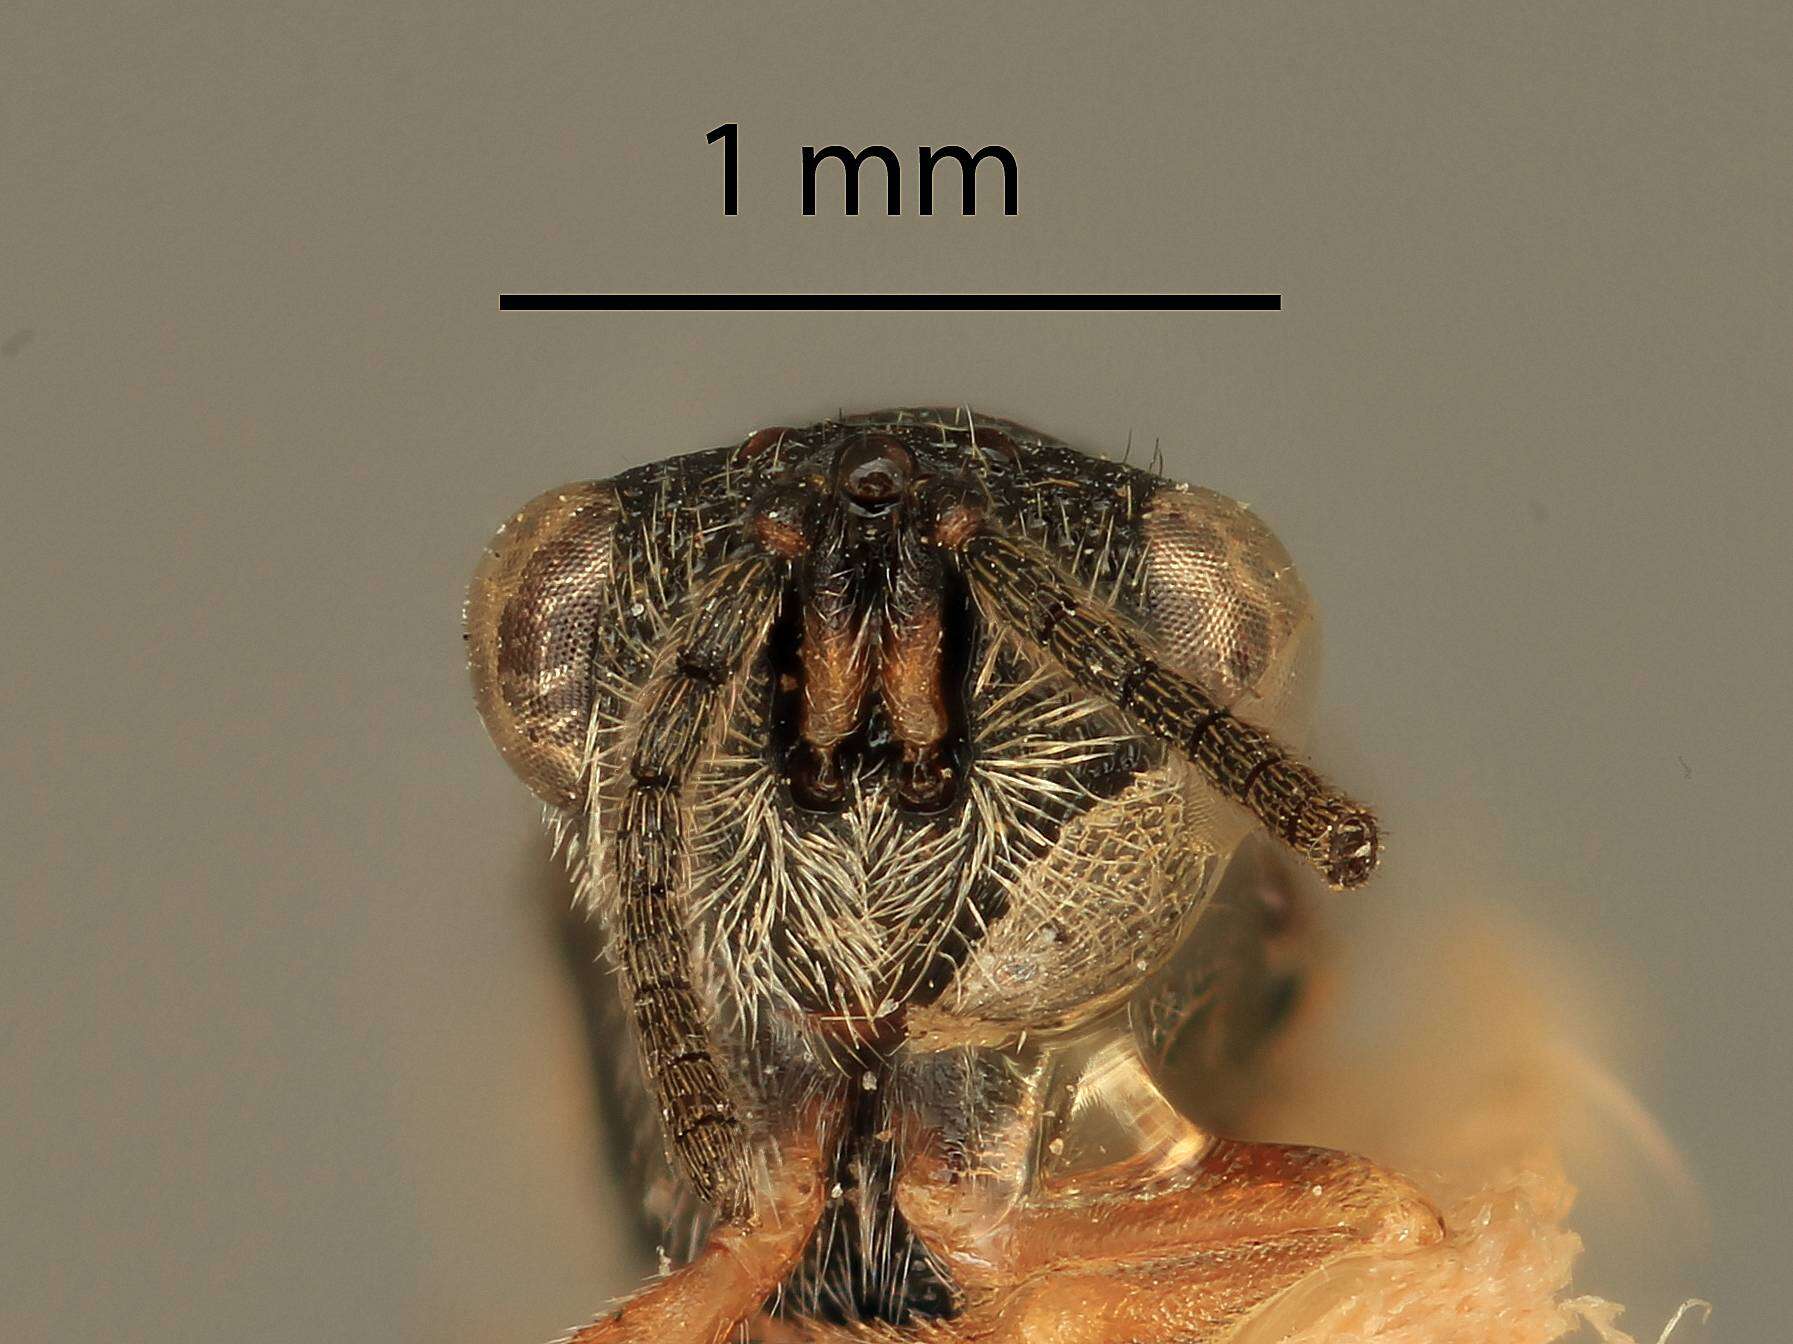 Image of Eurytoma mucronura Bugbee 1941